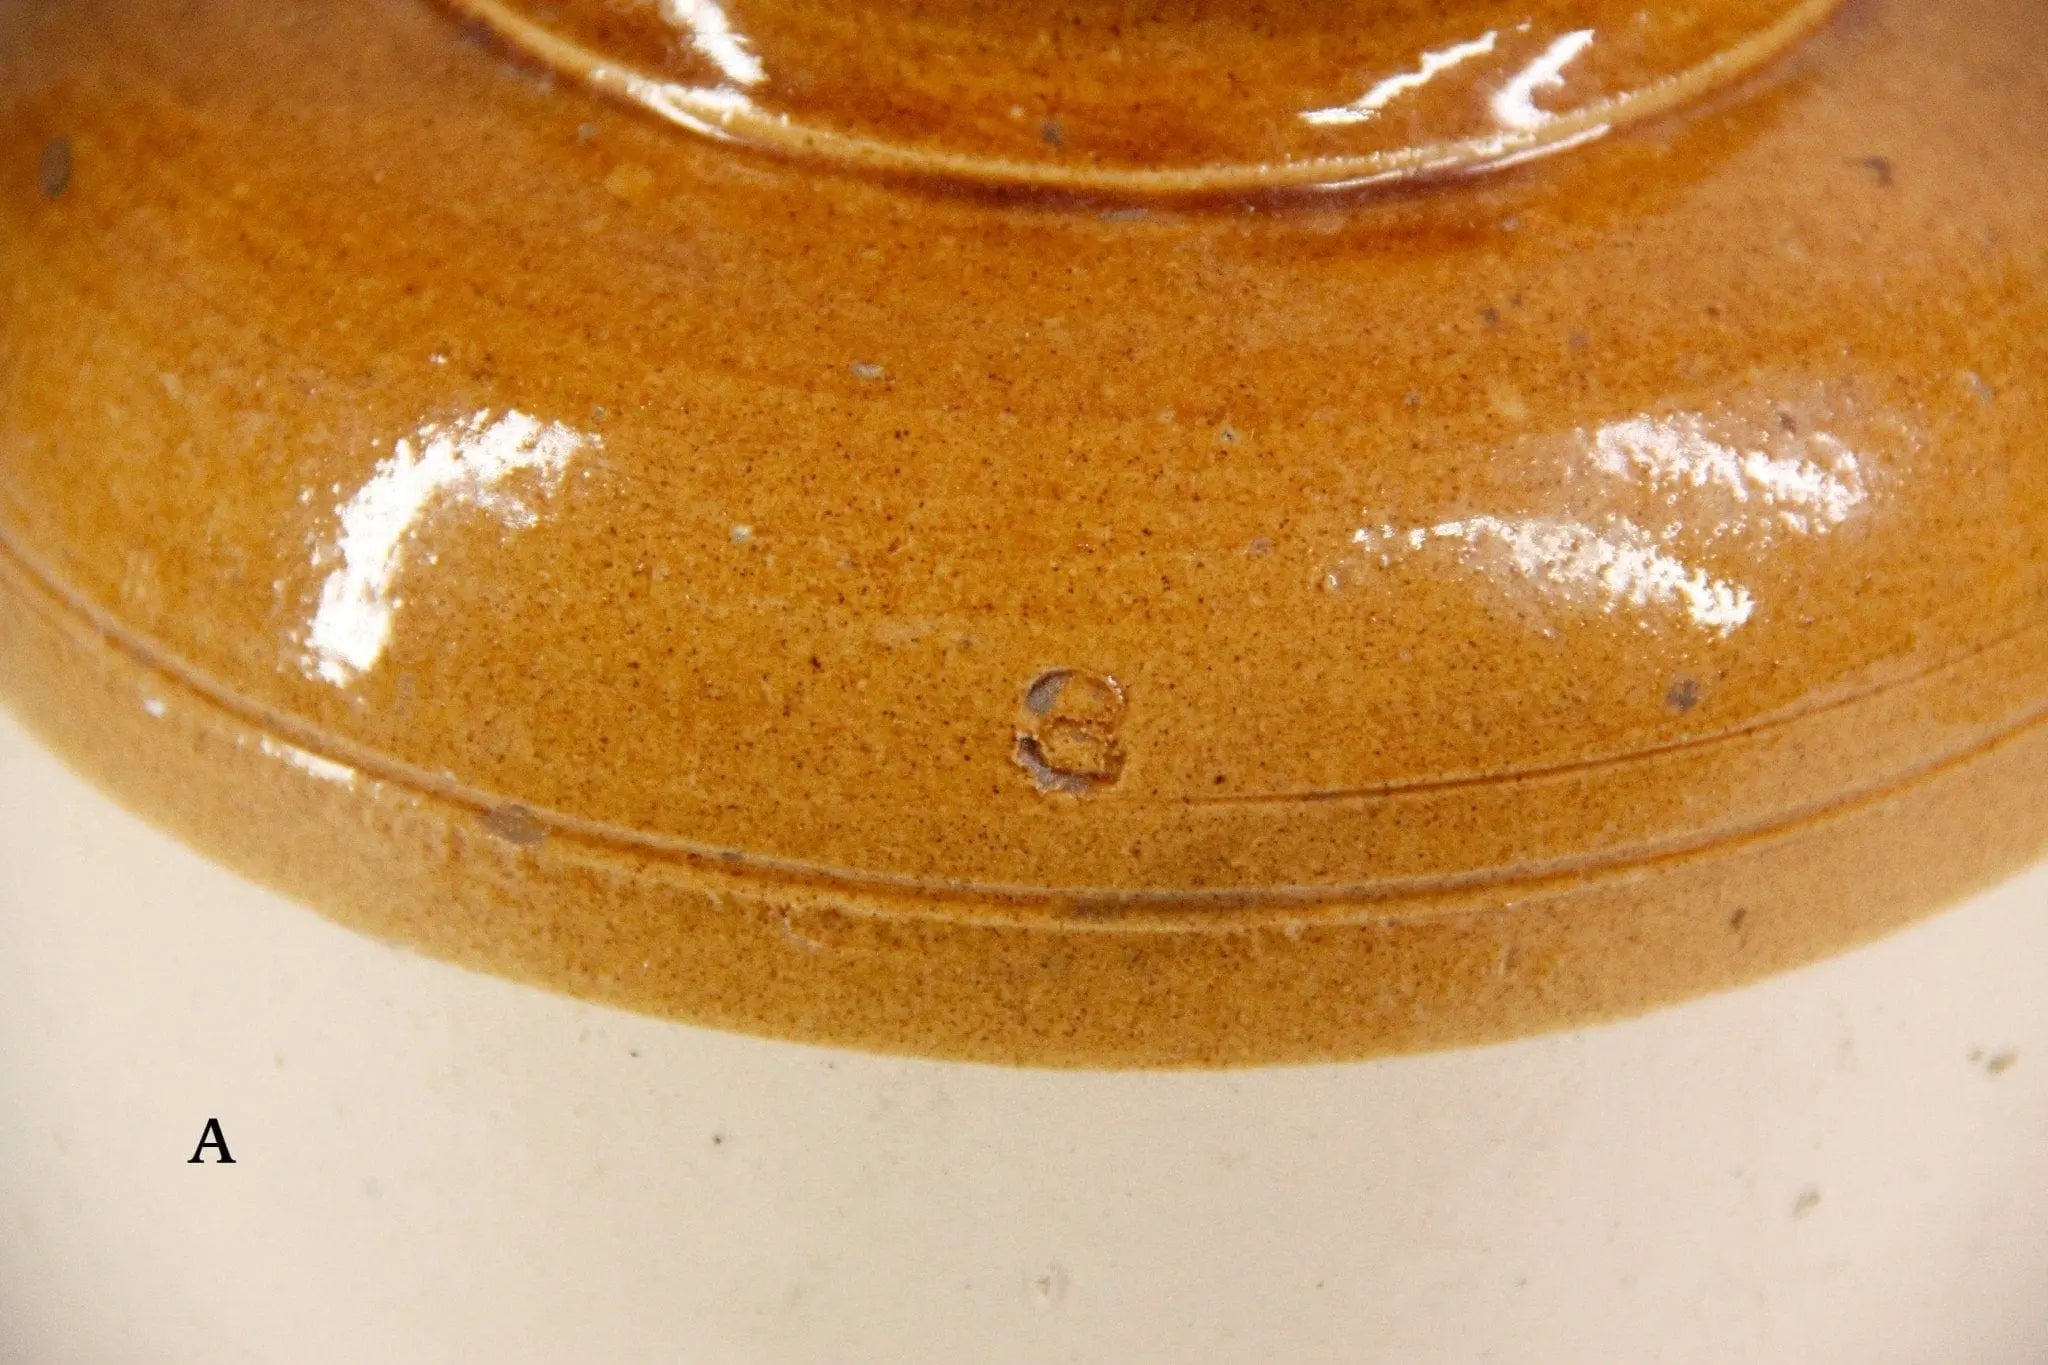 Antique Stoneware Canning Jars | Preserves  Debra Hall Lifestyle